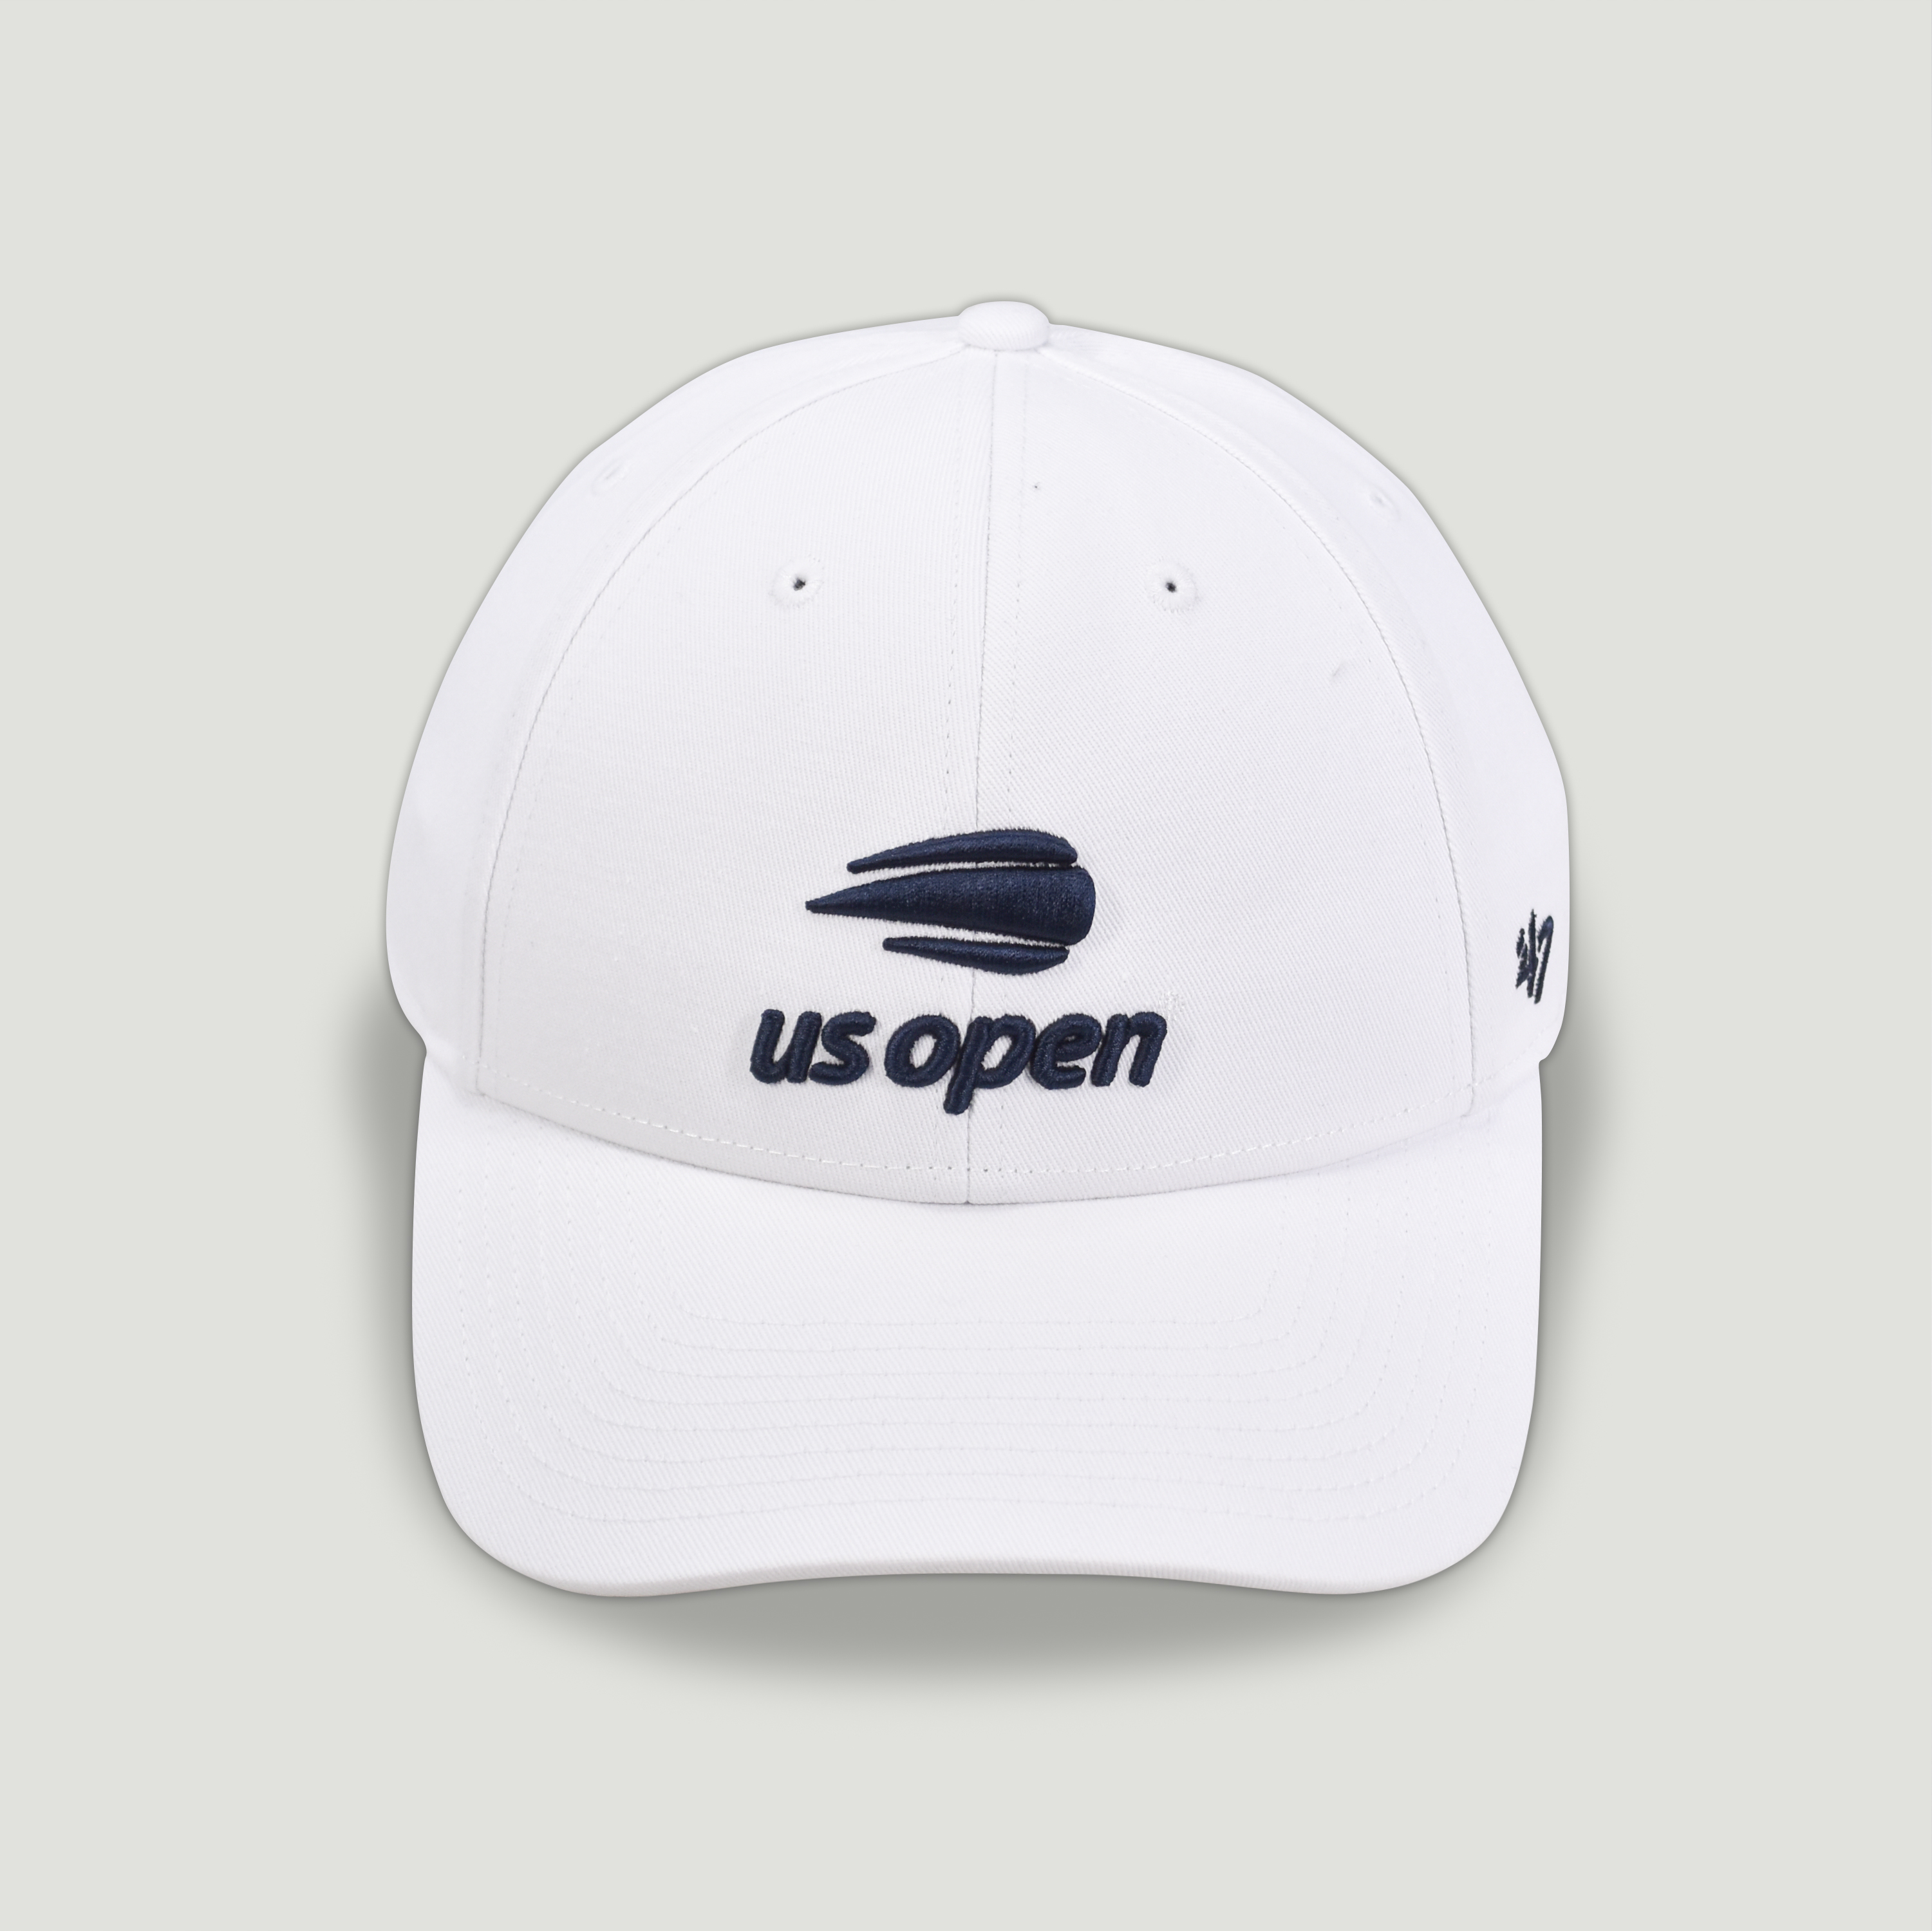 U.S.OPEN キャップ - 帽子